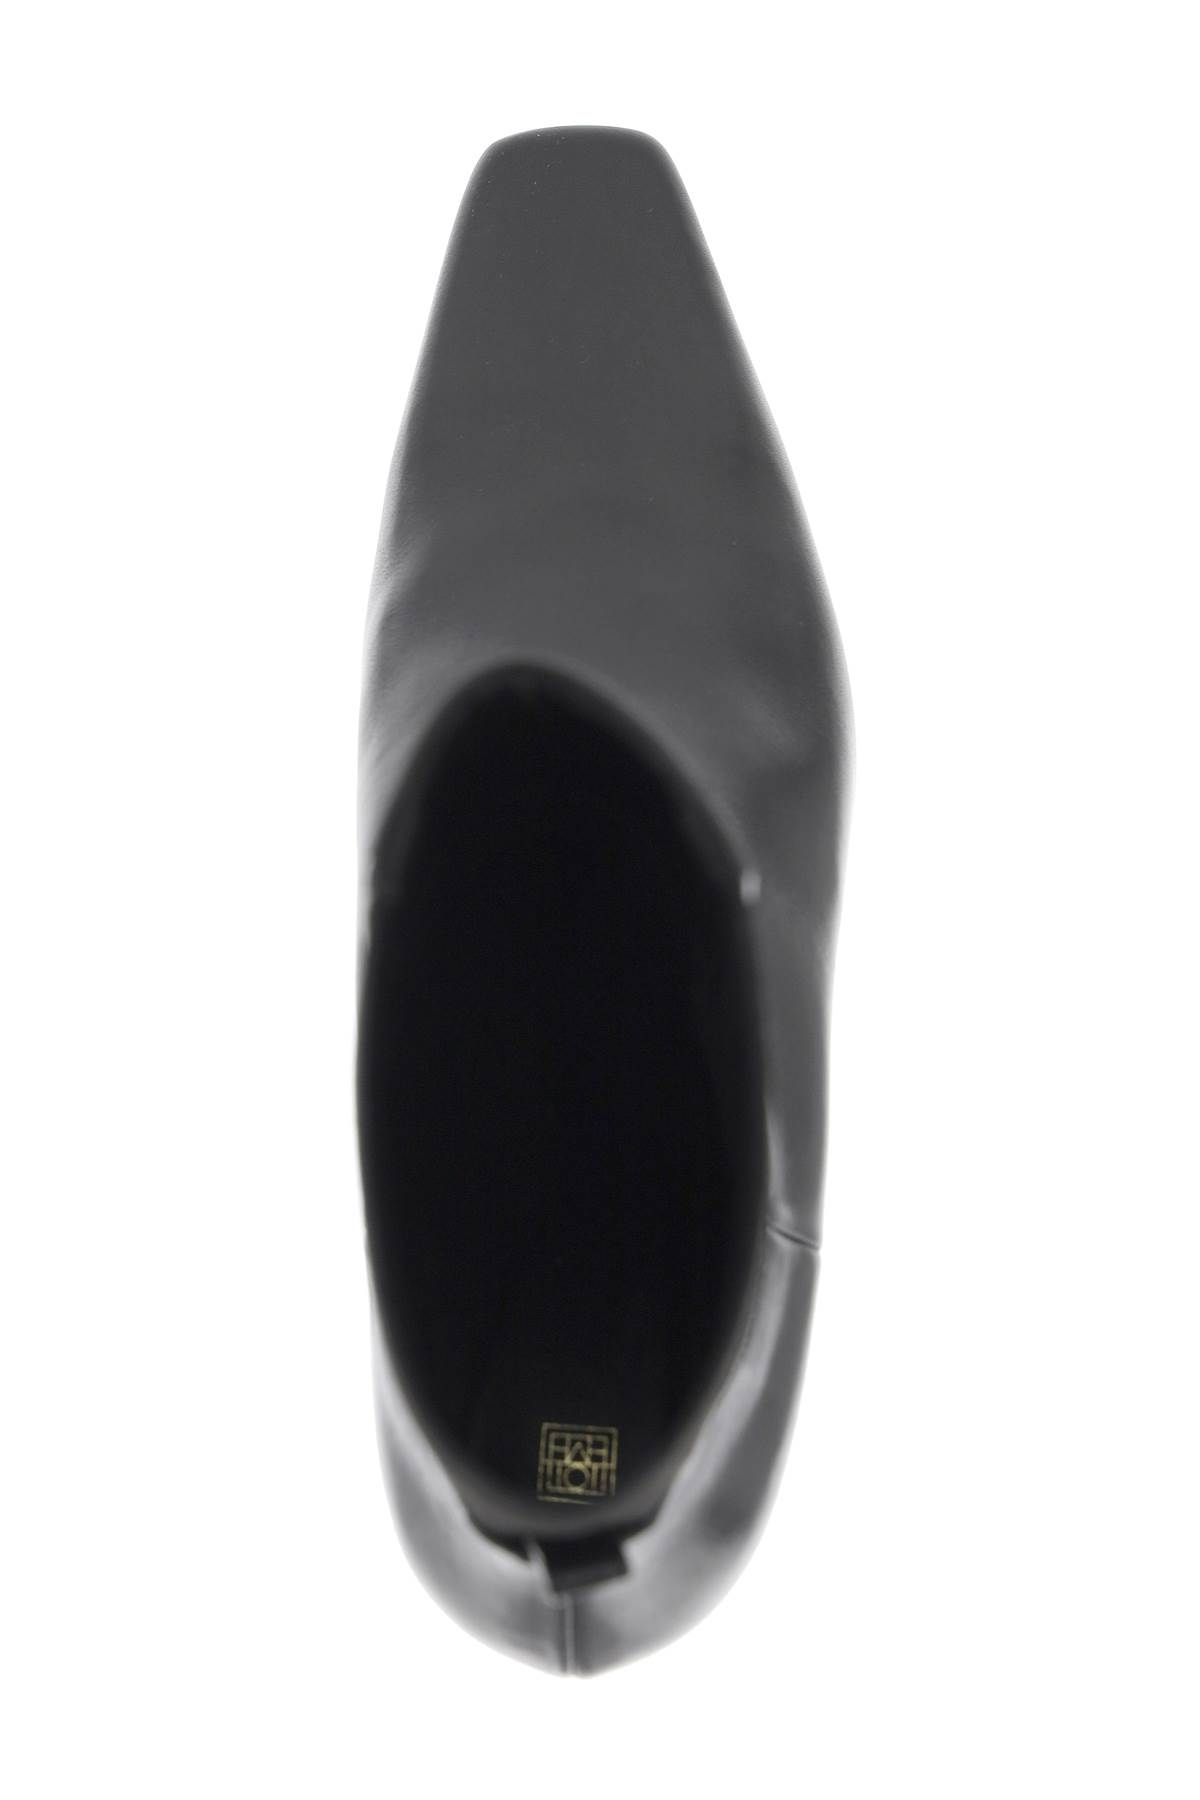 Shop Totême Mid Heel Leather Boots In Black